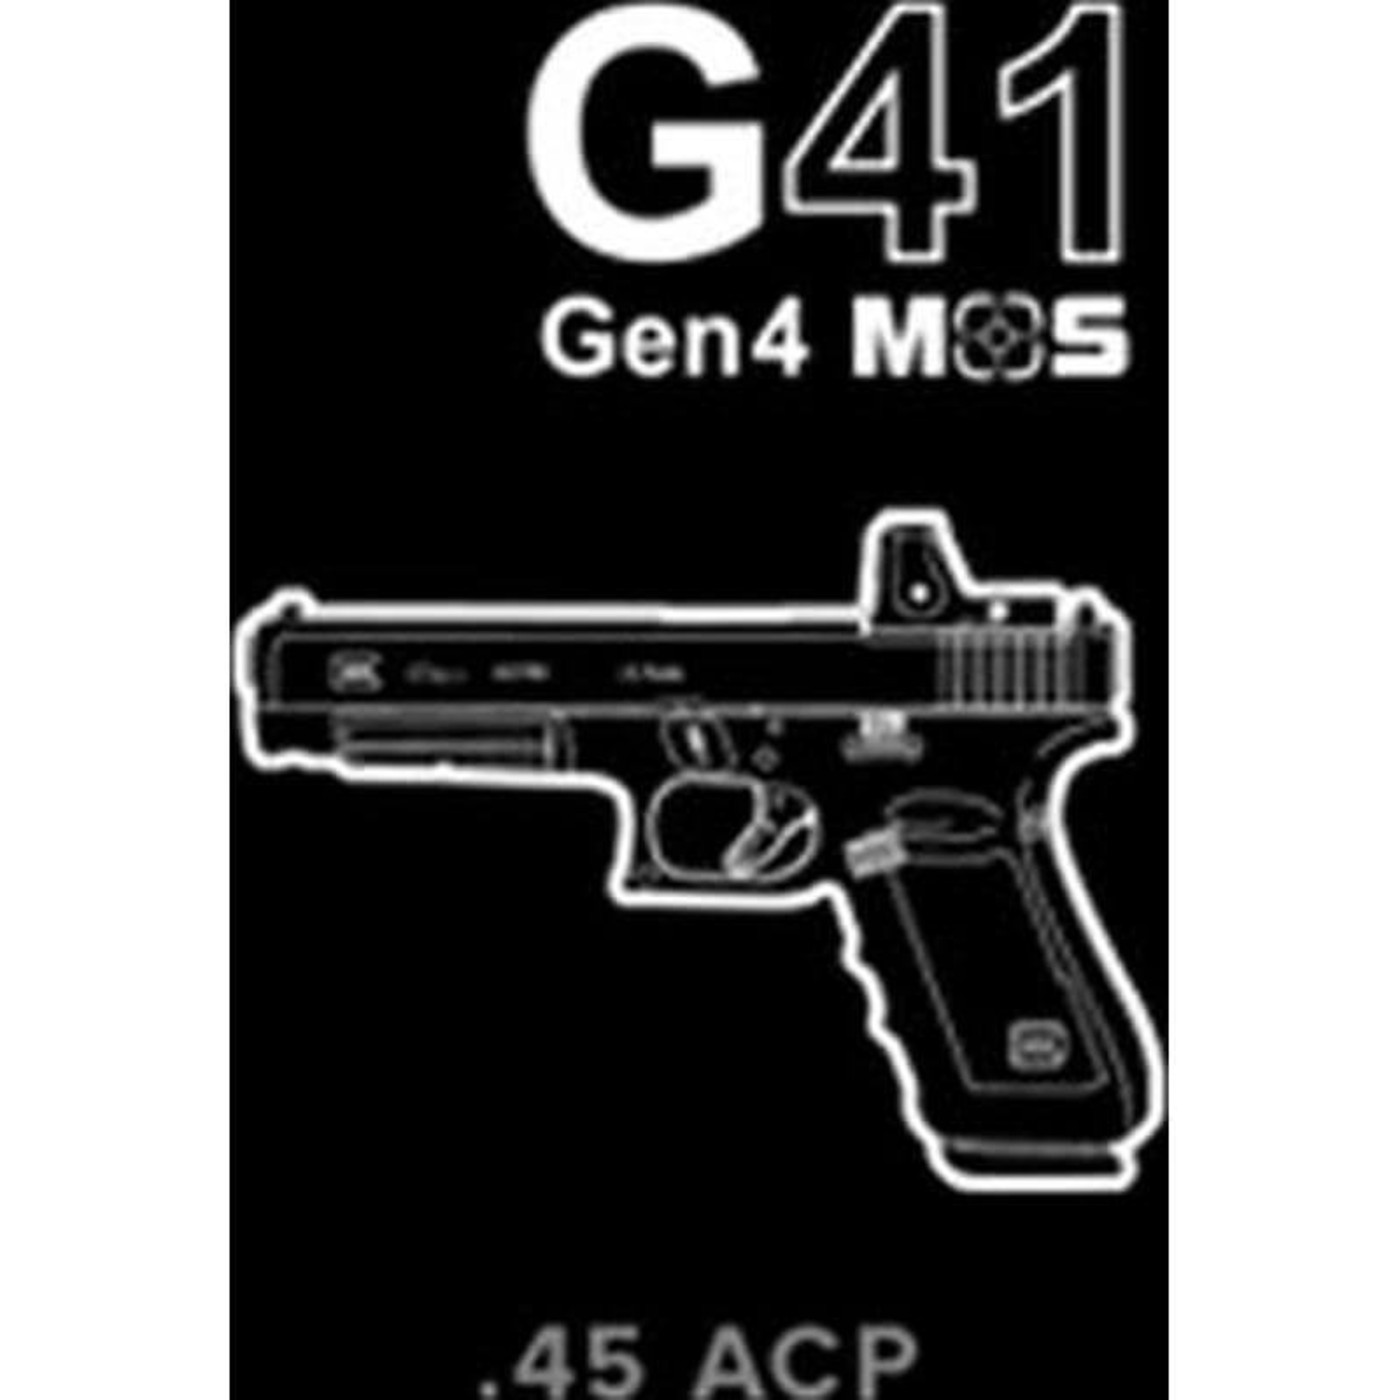 Glock G41 Gen 4 MOS 45 ACP